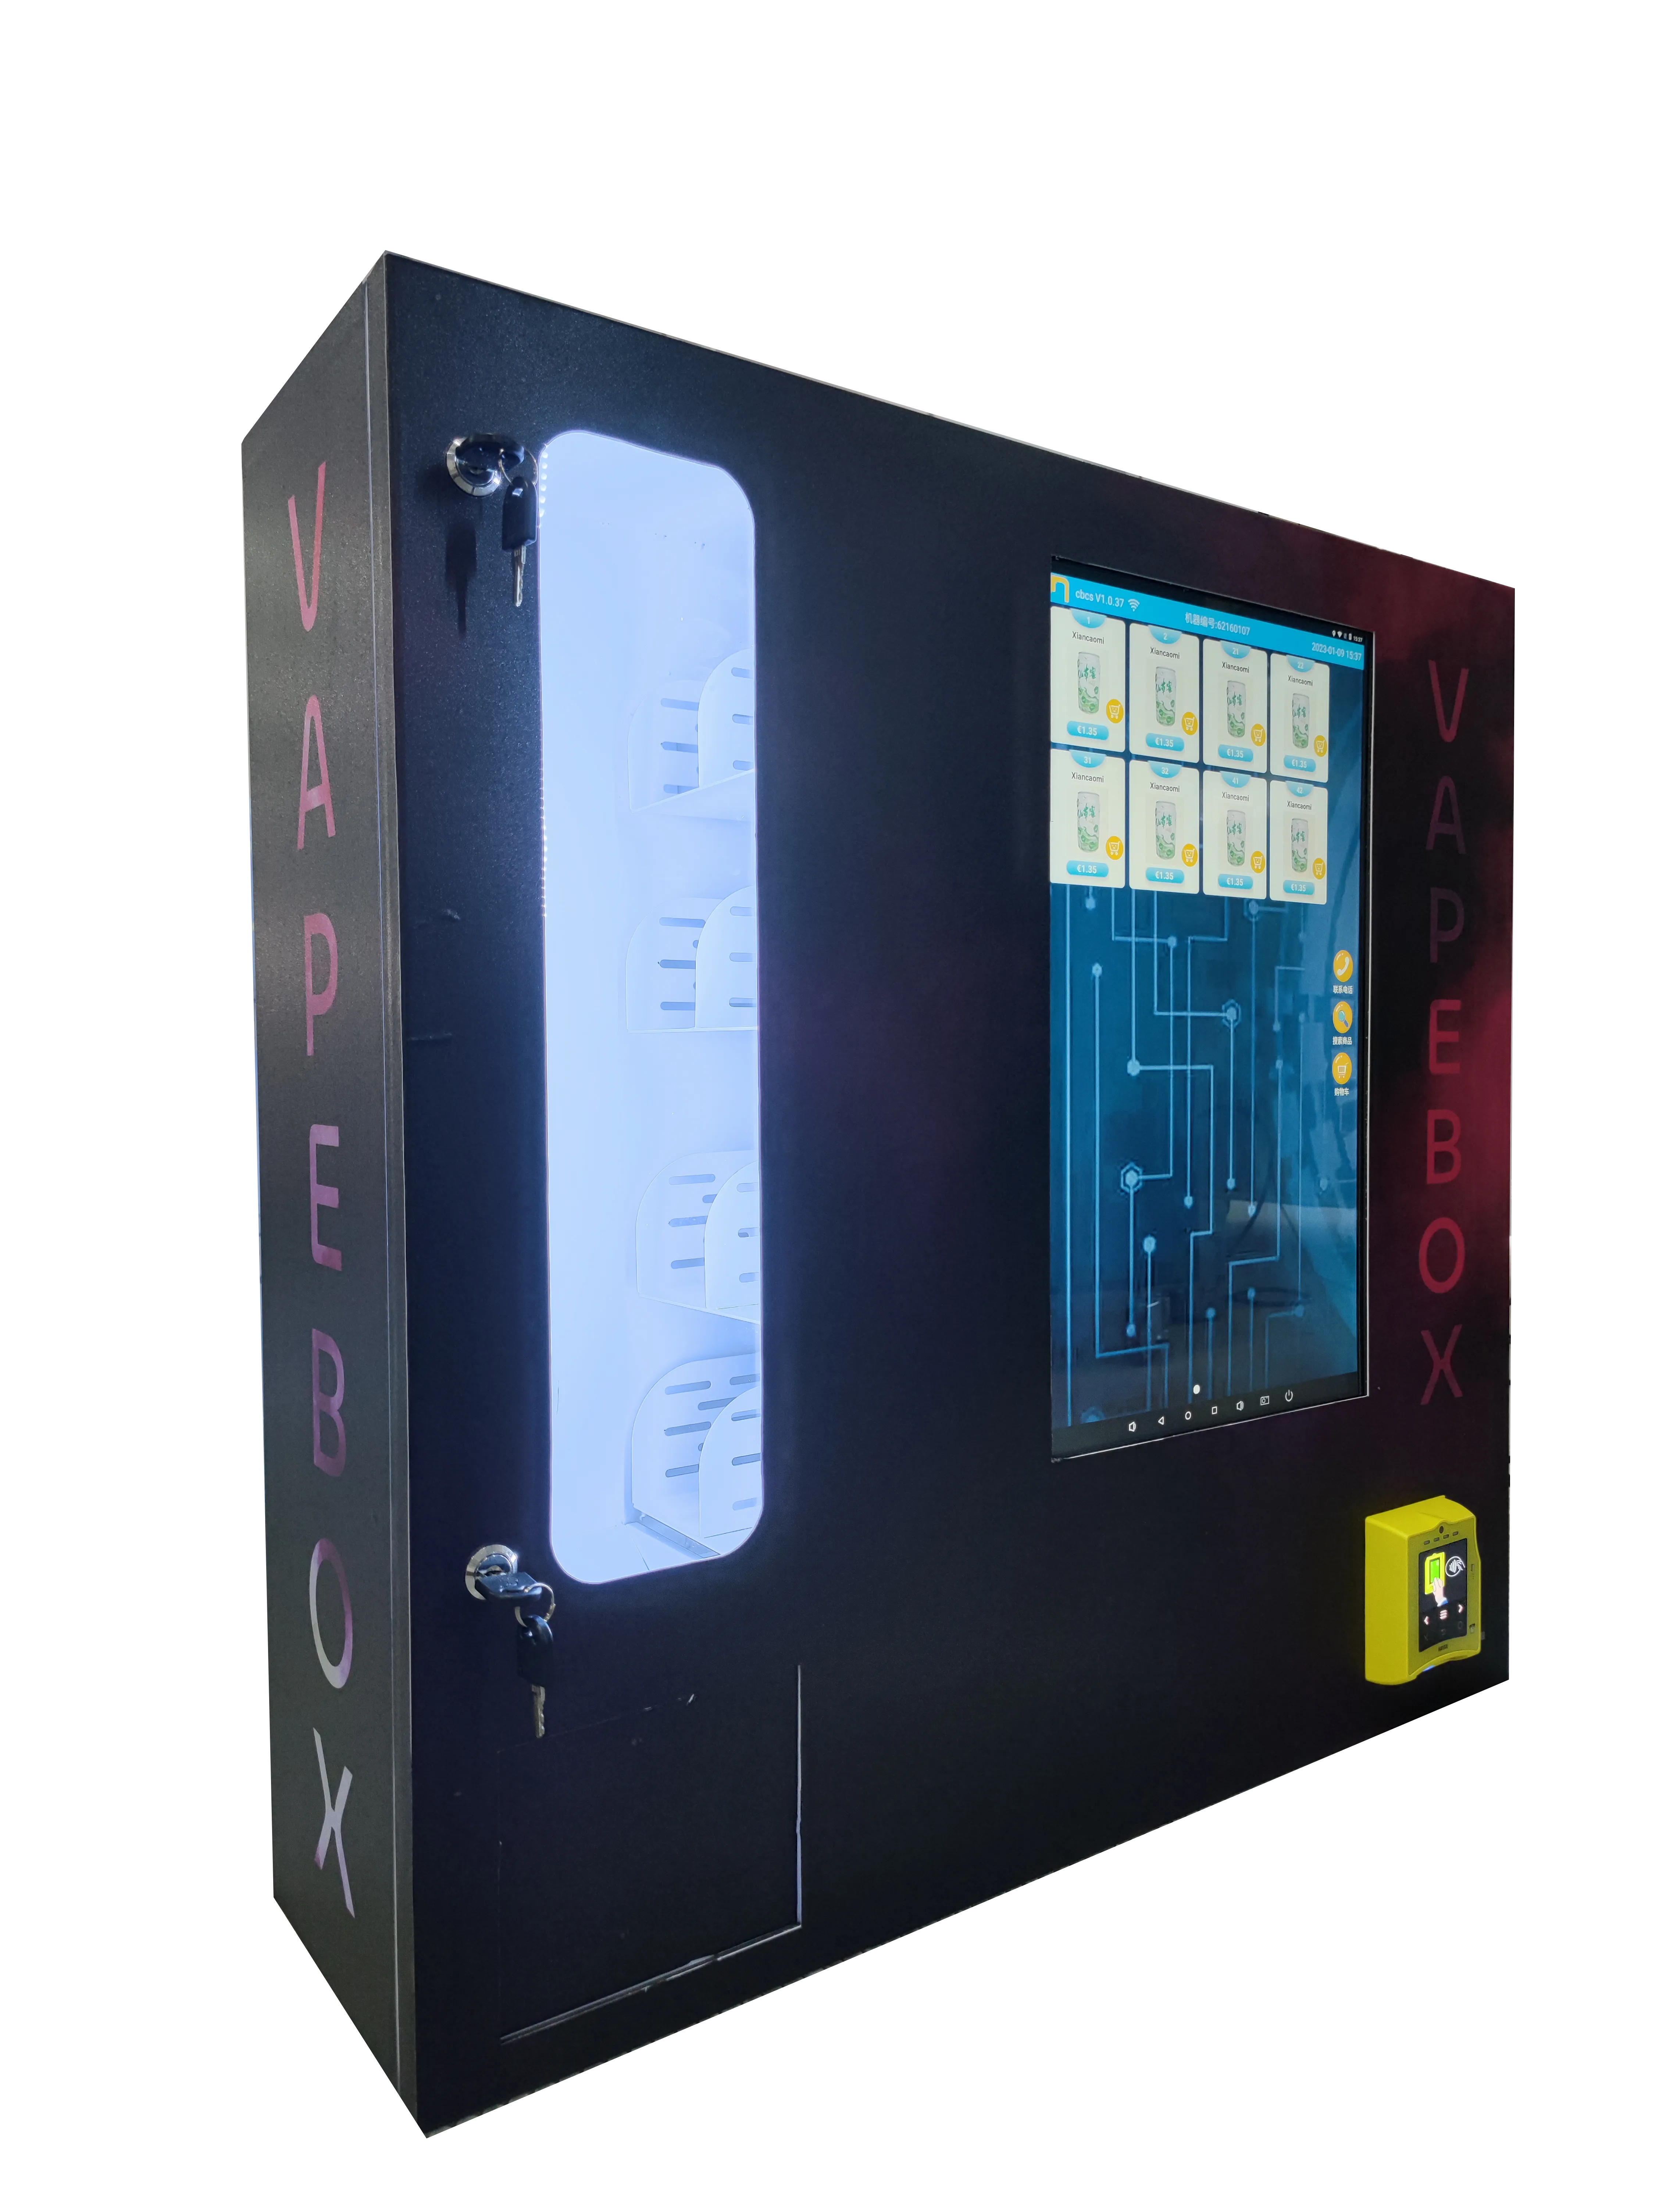 WEIMI smart vape vending machine for WEIMIBAR Disposable Rechargeable Vape E-cigarette for sale support customization